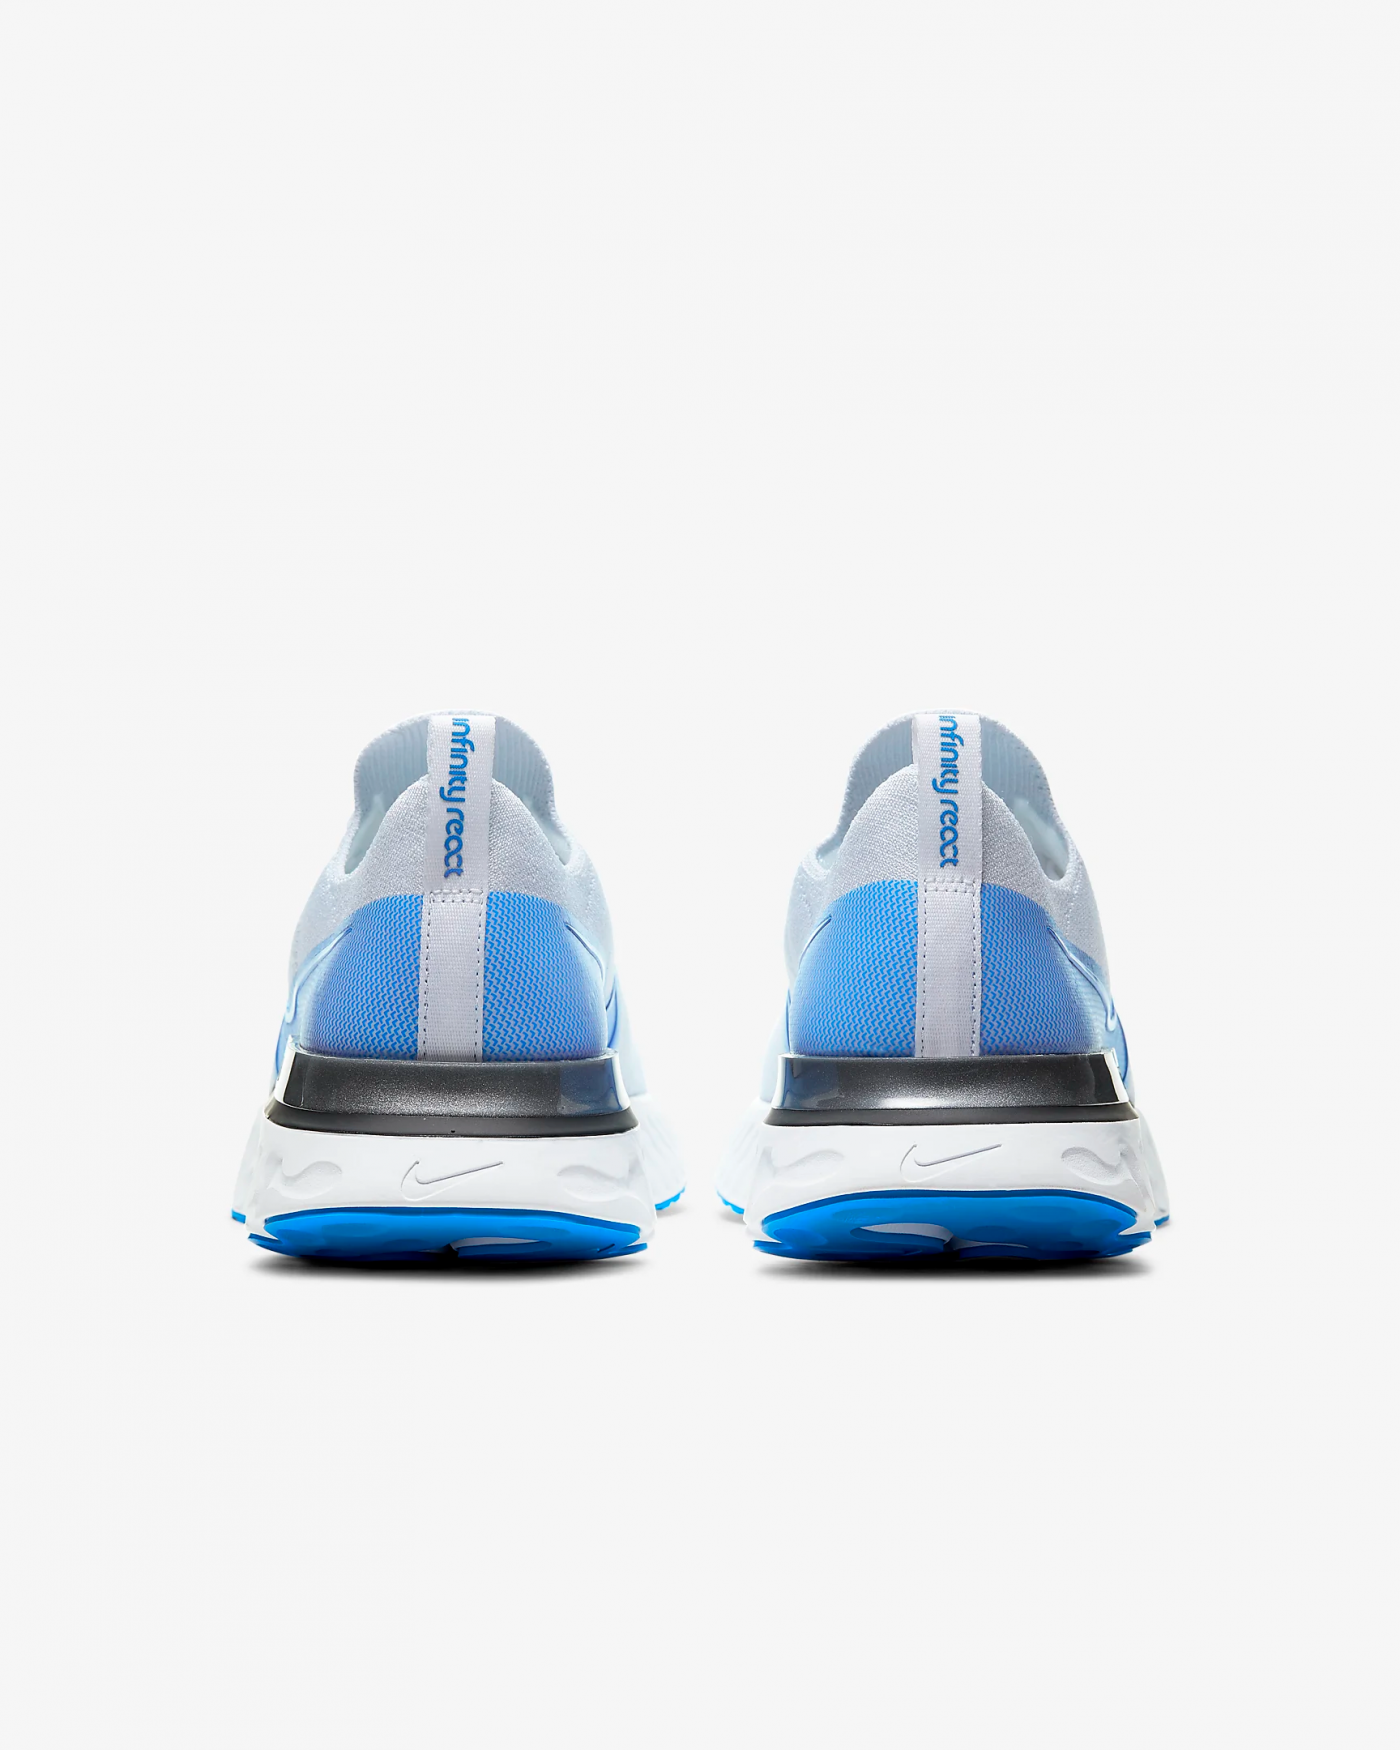 Nike-react-infinity-flyknit-blanc-bleu-6